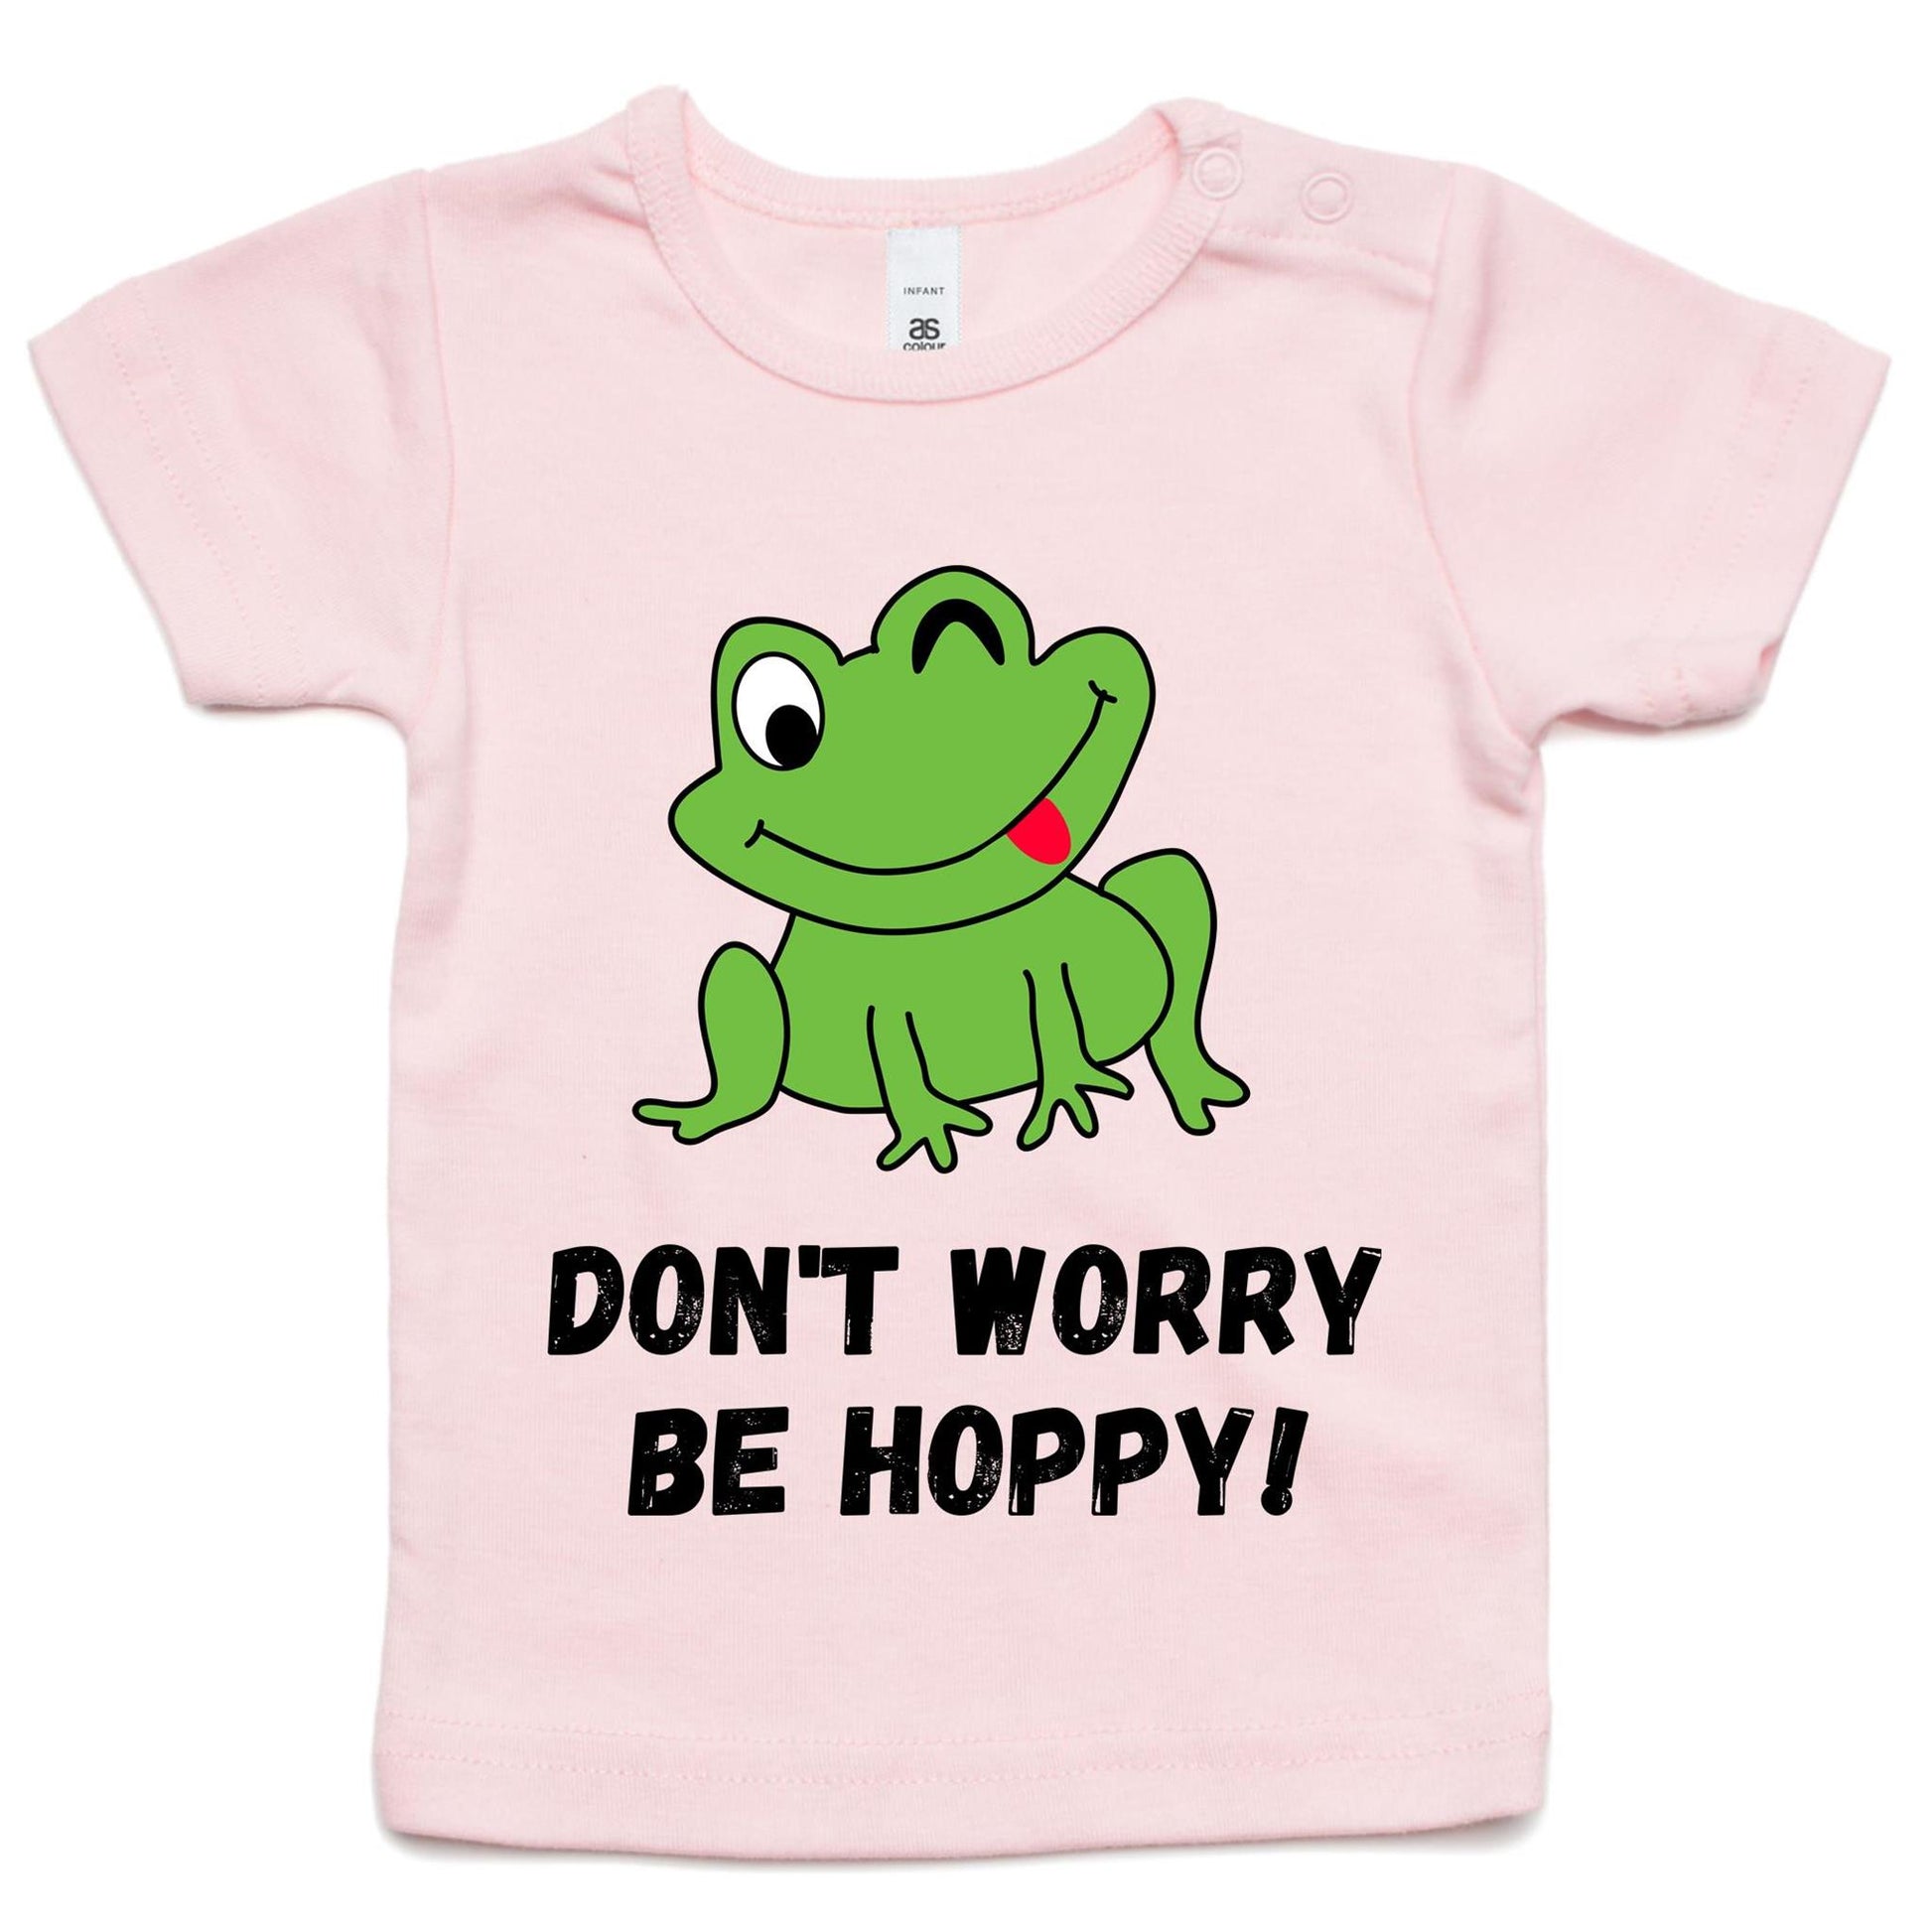 Don't Worry Be Hoppy - Baby T-shirt Pink Baby T-shirt animal